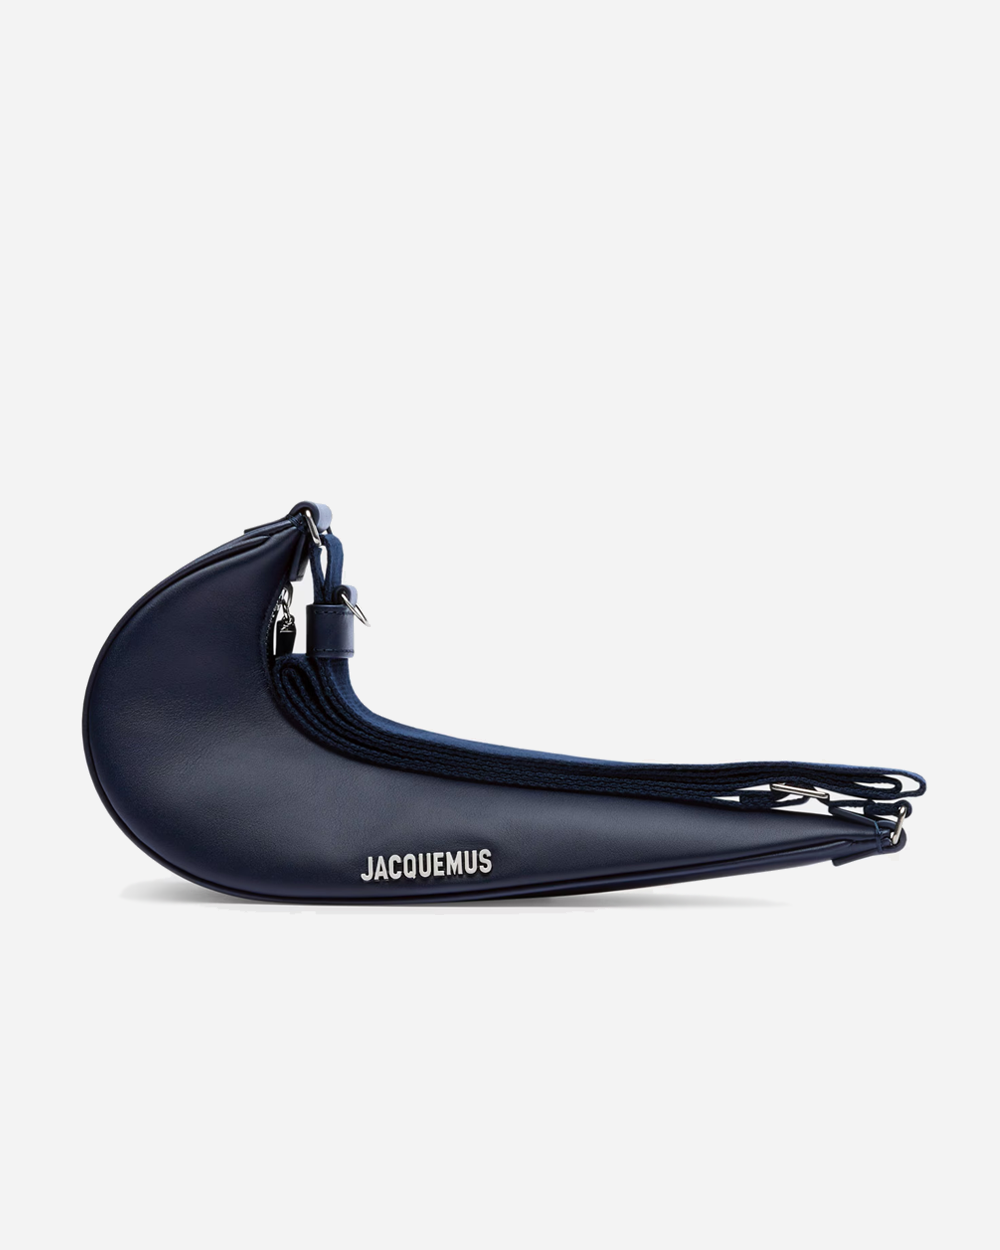 Jacquemus x Nike Swoosh Bag Midnight Navy/Shiny Silver DQ0324-410Jacquemus x Nike Swoosh Bag Midnight Navy/Shiny Silver DQ0324-410